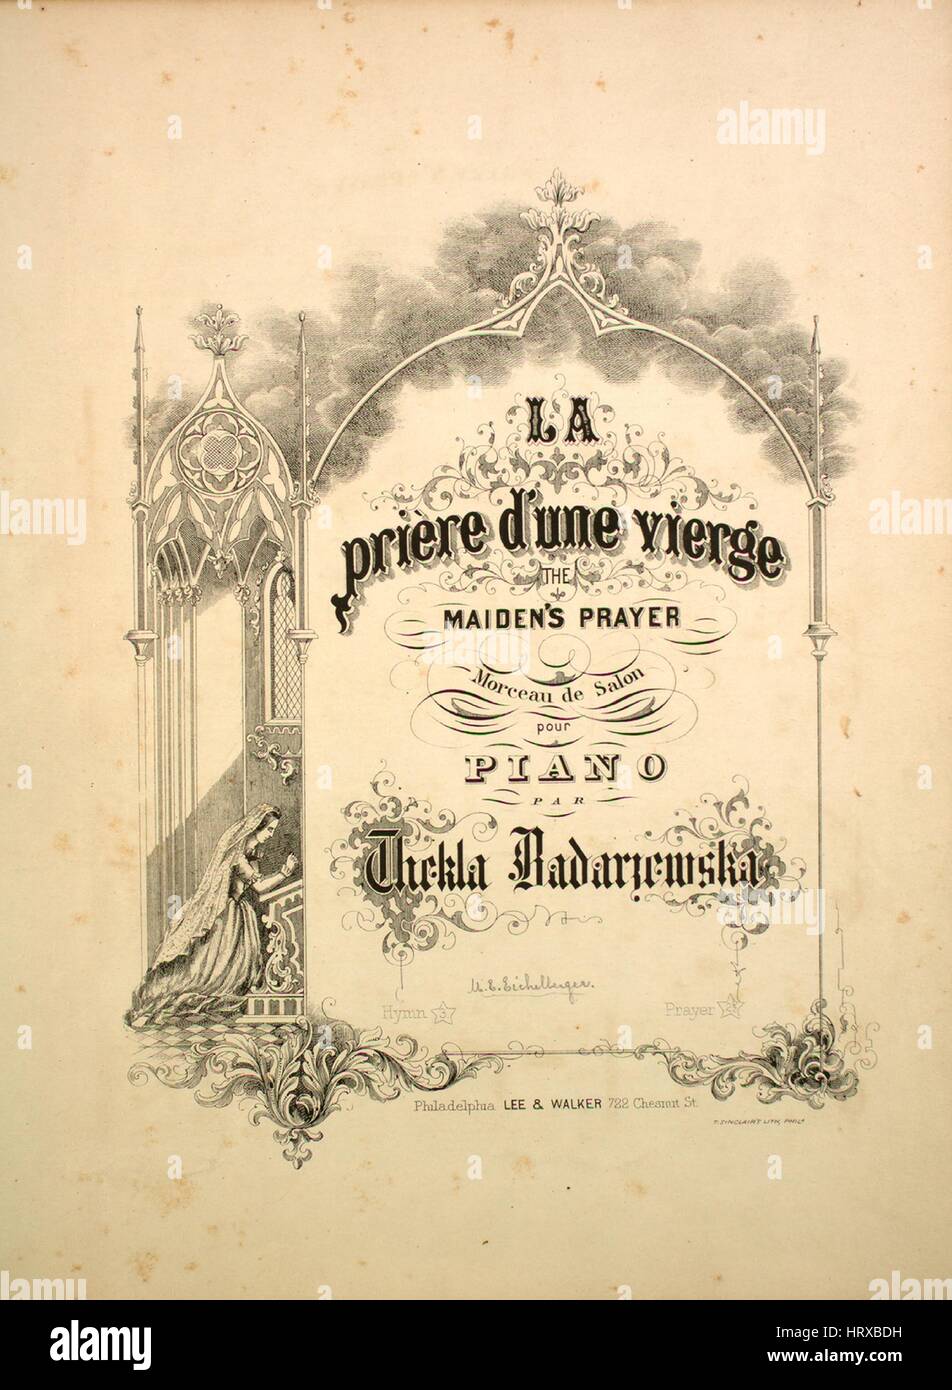 Sheet music cover image of the song 'La Priere d'une Vierge The Maiden's  Prayer Morceau de Salon pour Piano', with original authorship notes reading  'Par Thekla Badarzewska', United States, 1900. The publisher